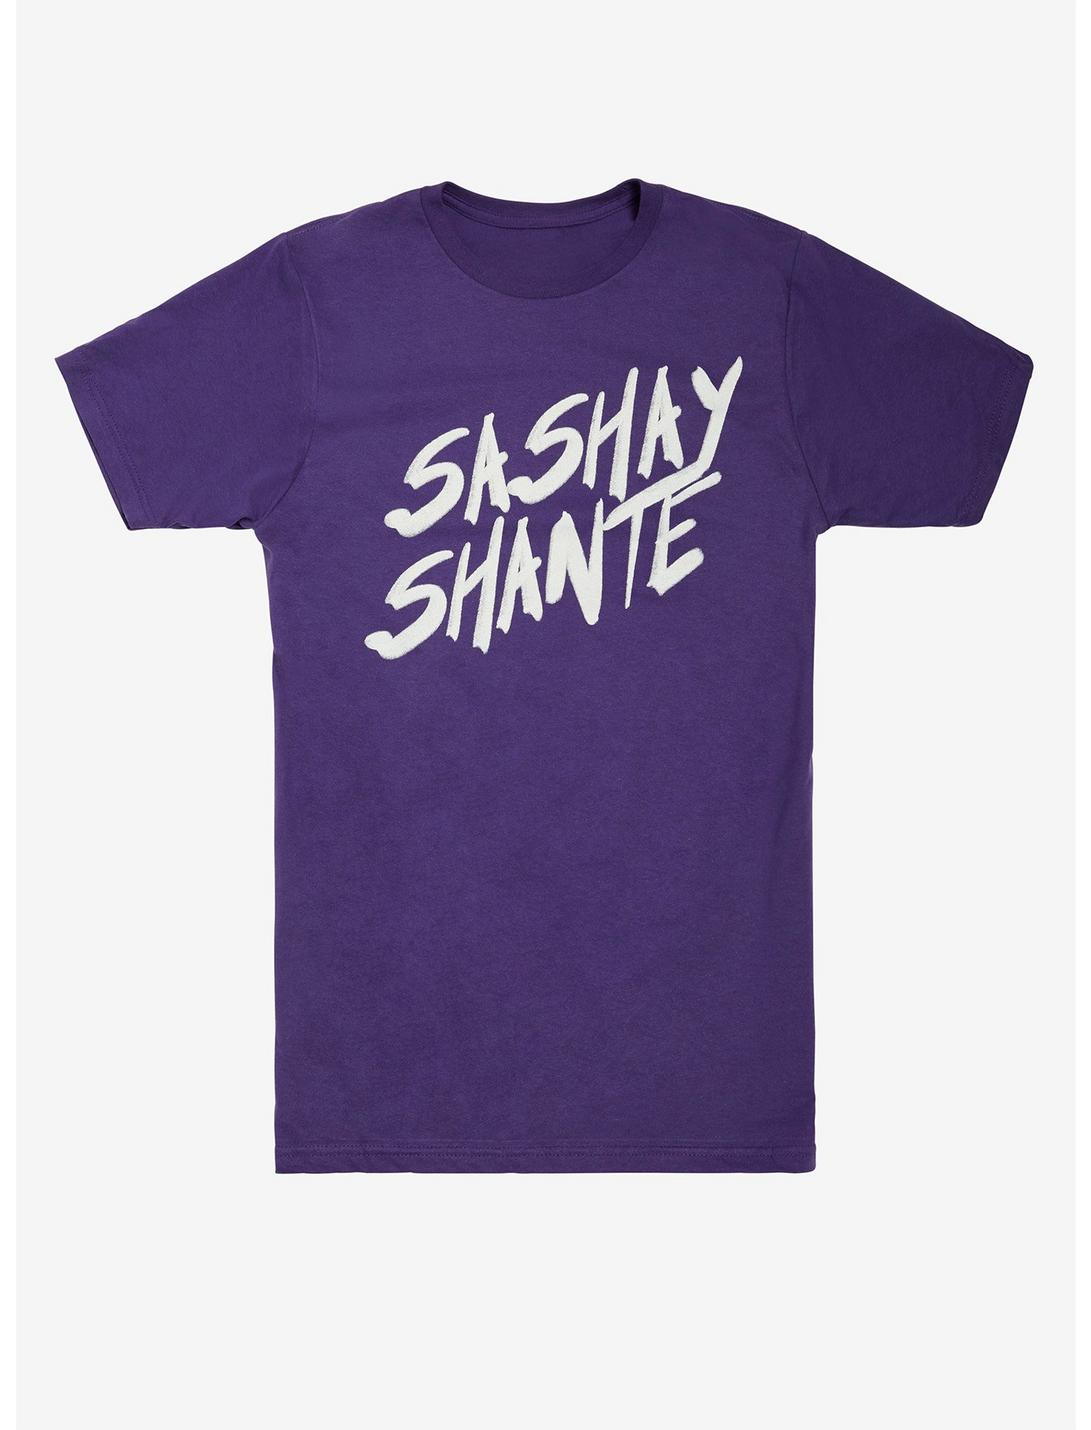 RuPaul Sashay Shante T-Shirt Hot Topic Exclusive, PURPLE, hi-res